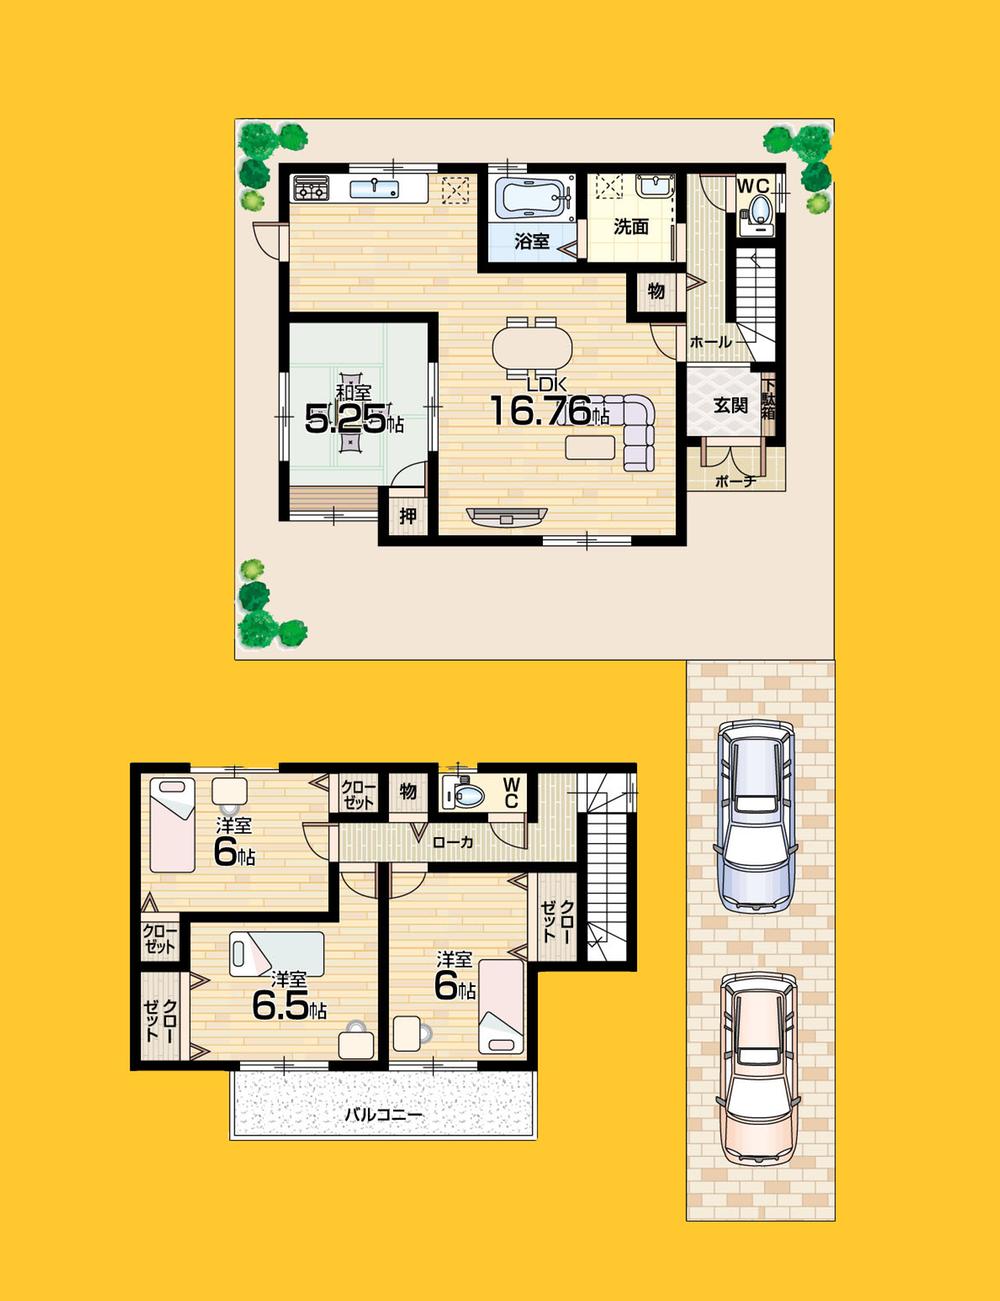 Floor plan. (No. 3 locations), Price 28,300,000 yen, 4LDK, Land area 163.23 sq m , Building area 98.01 sq m